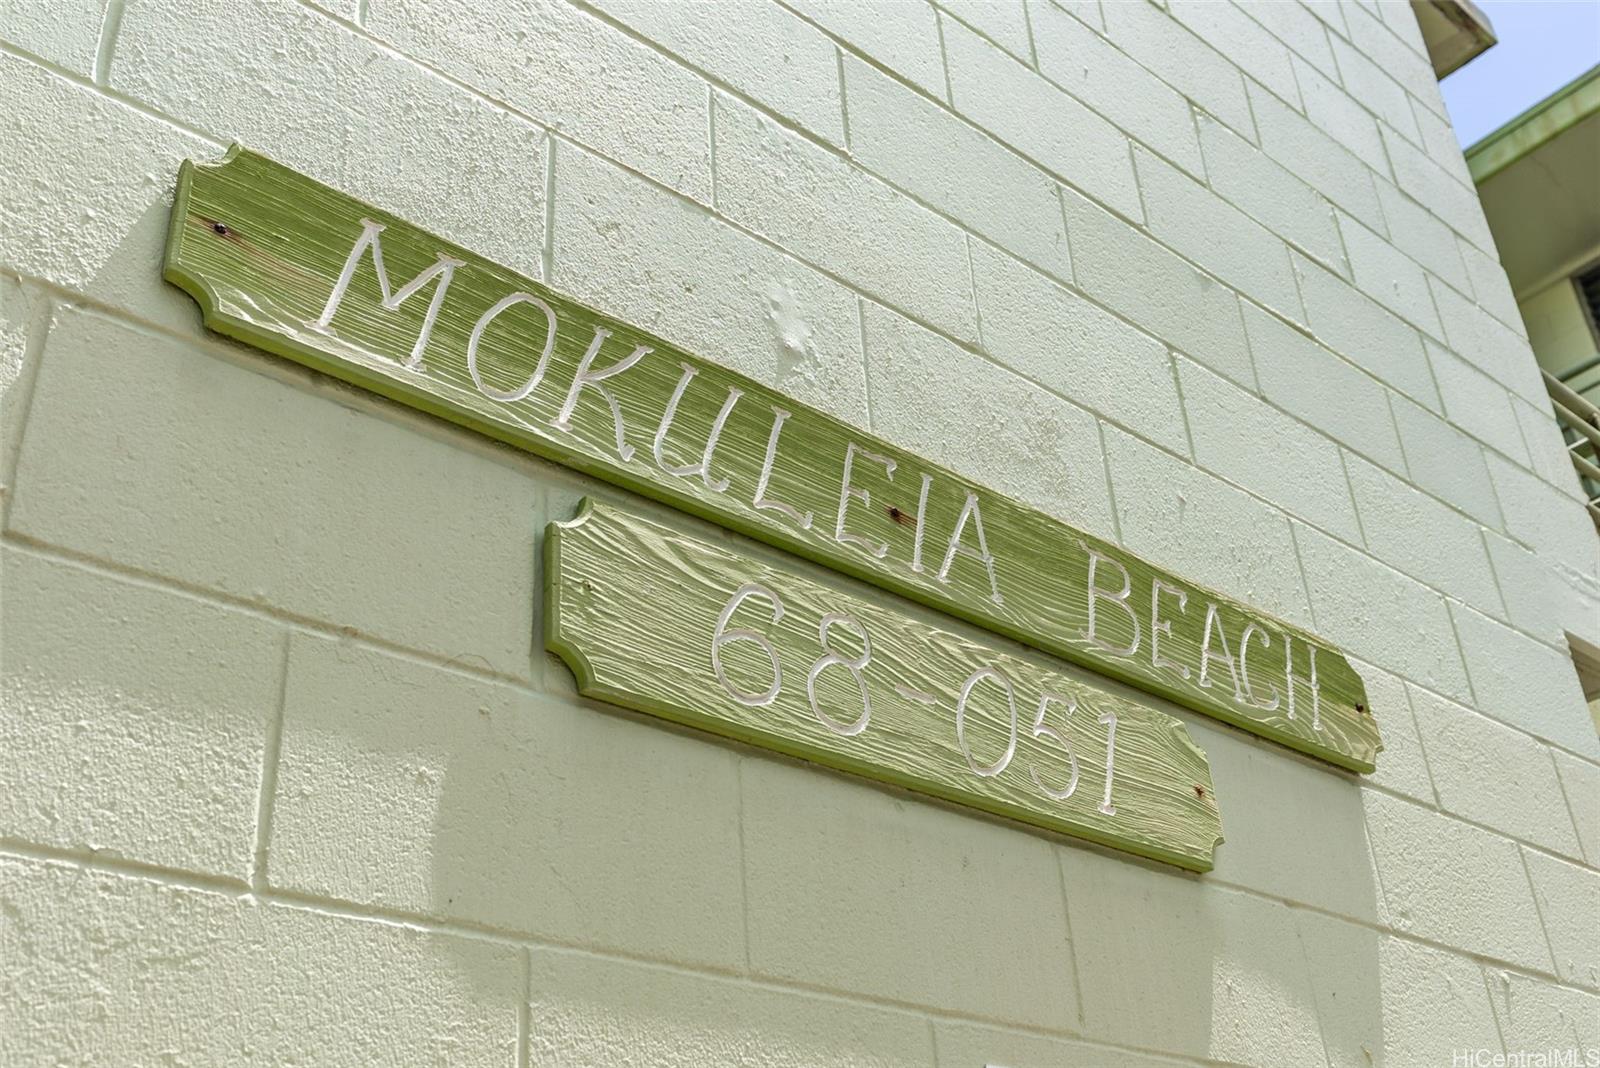 Mokuleia Beach Apts 68-051 Akule Street  Unit 204